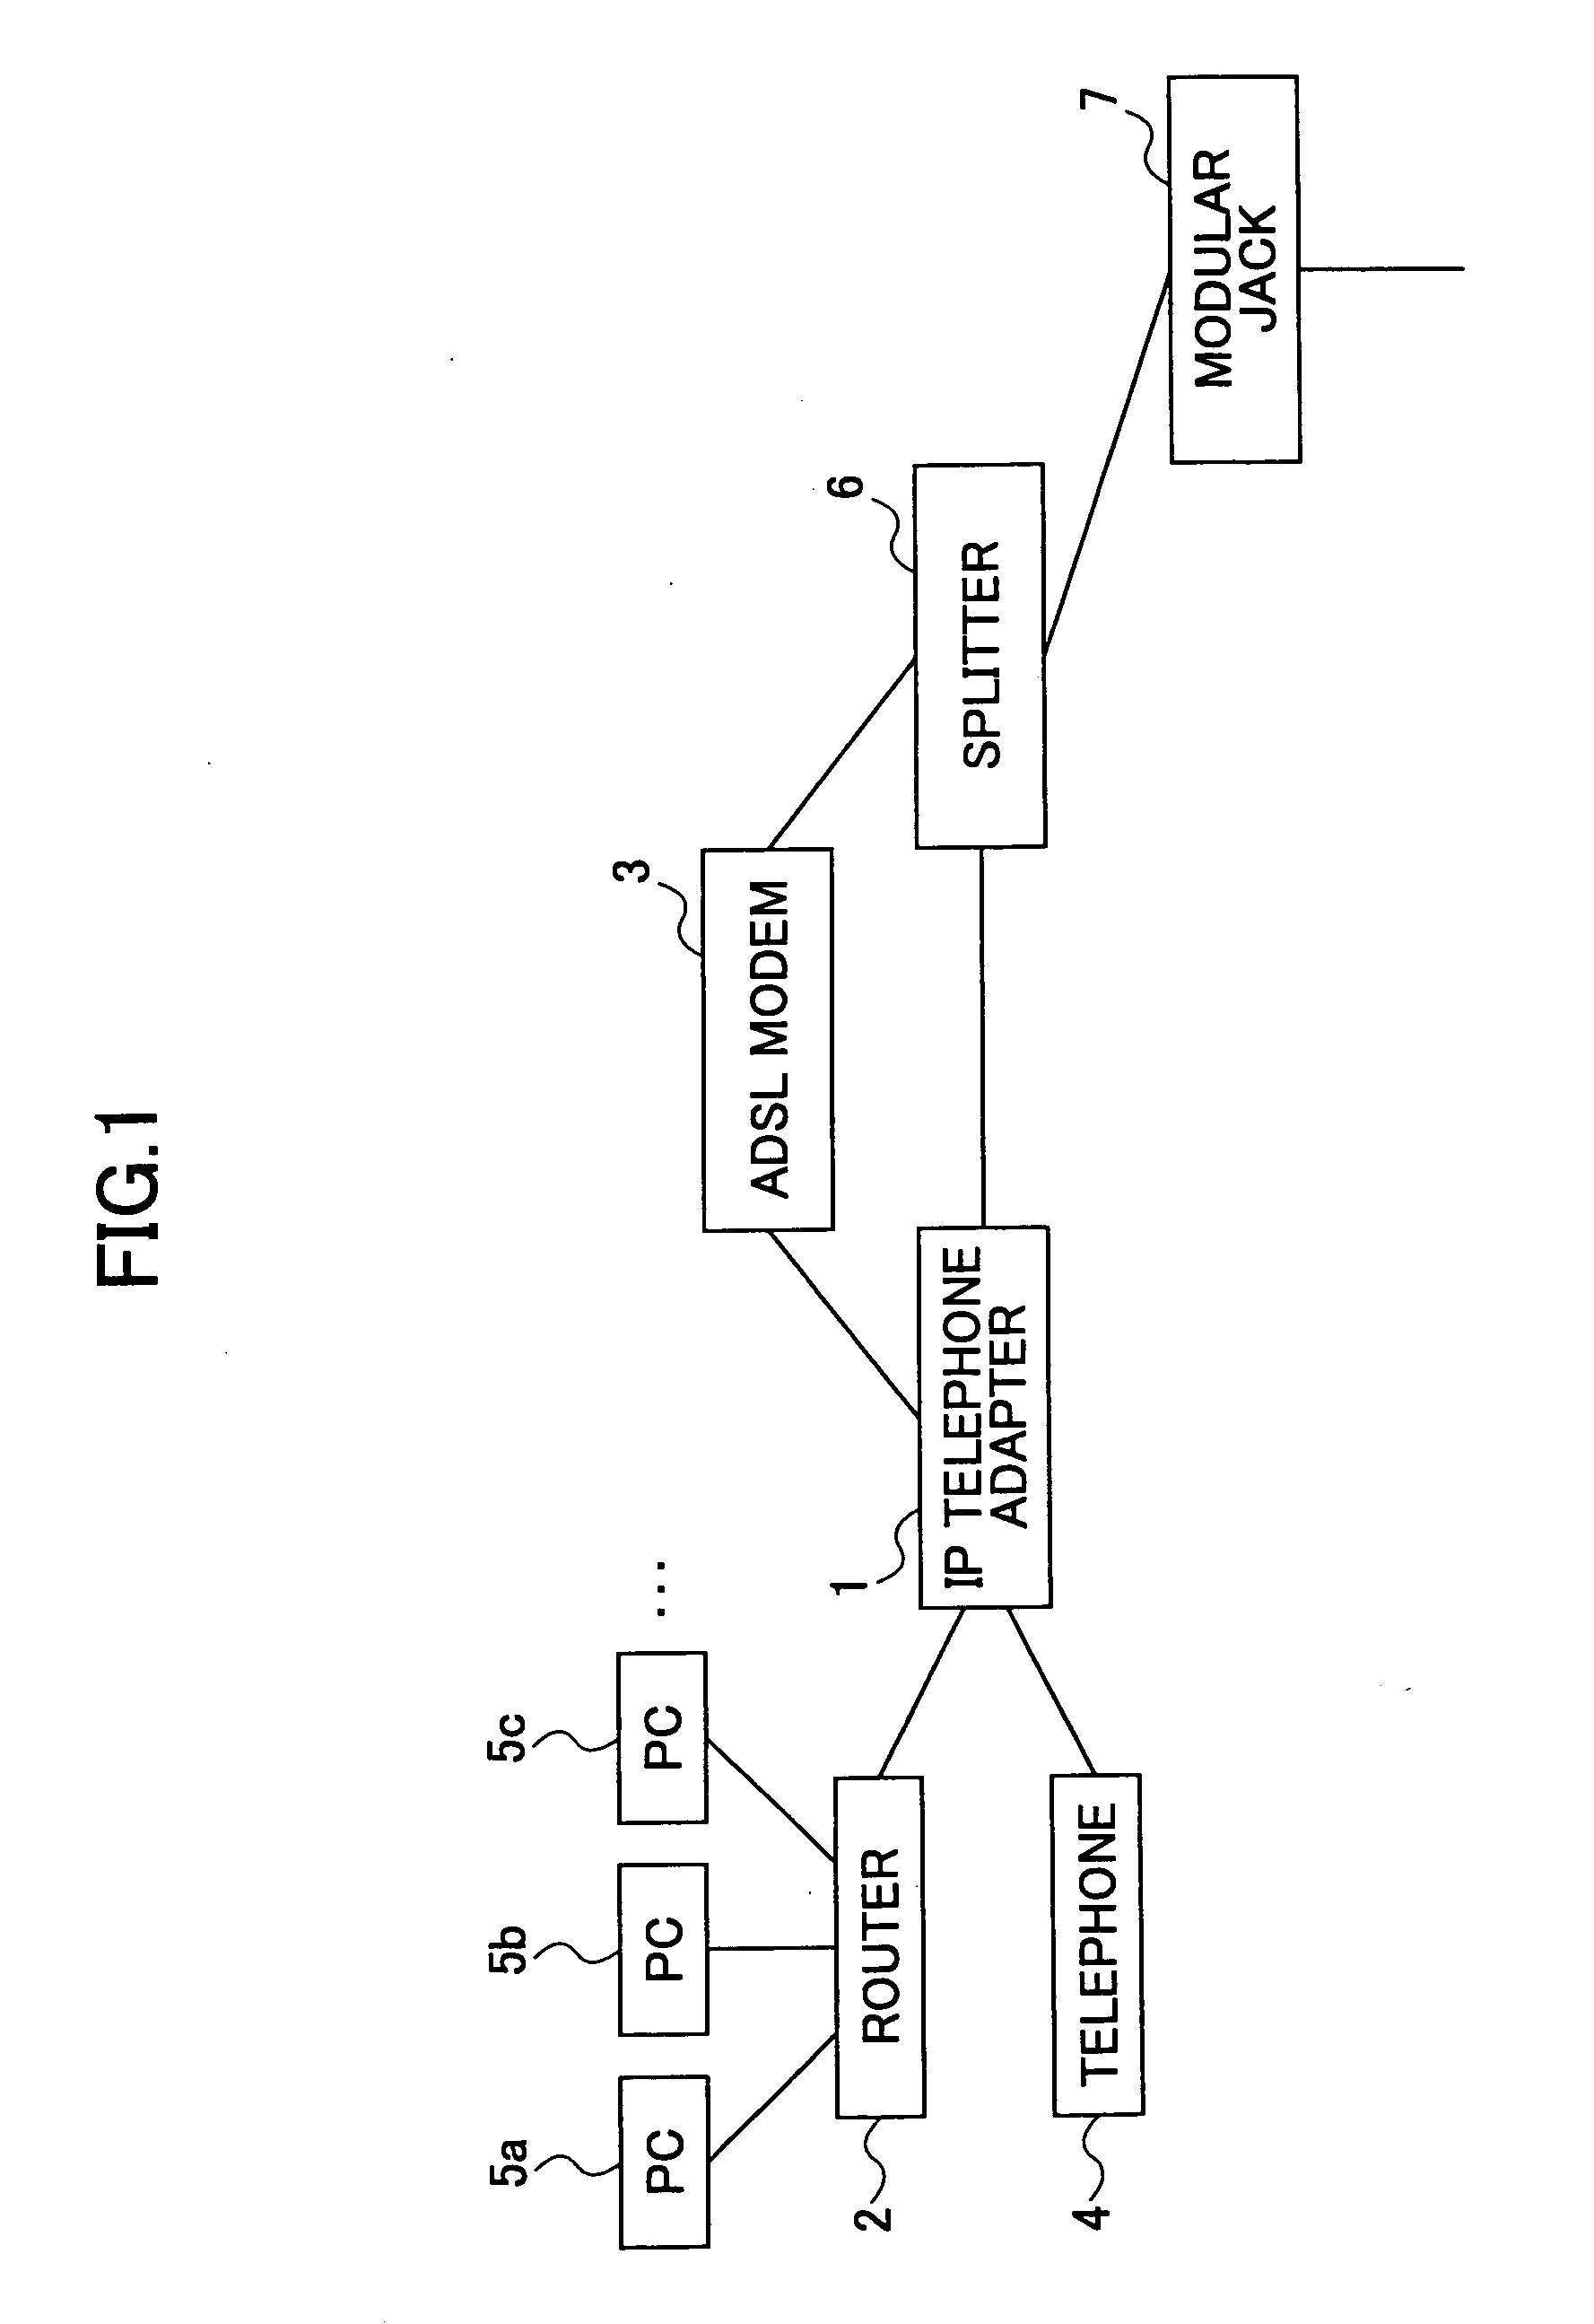 Circuit control apparatus and method